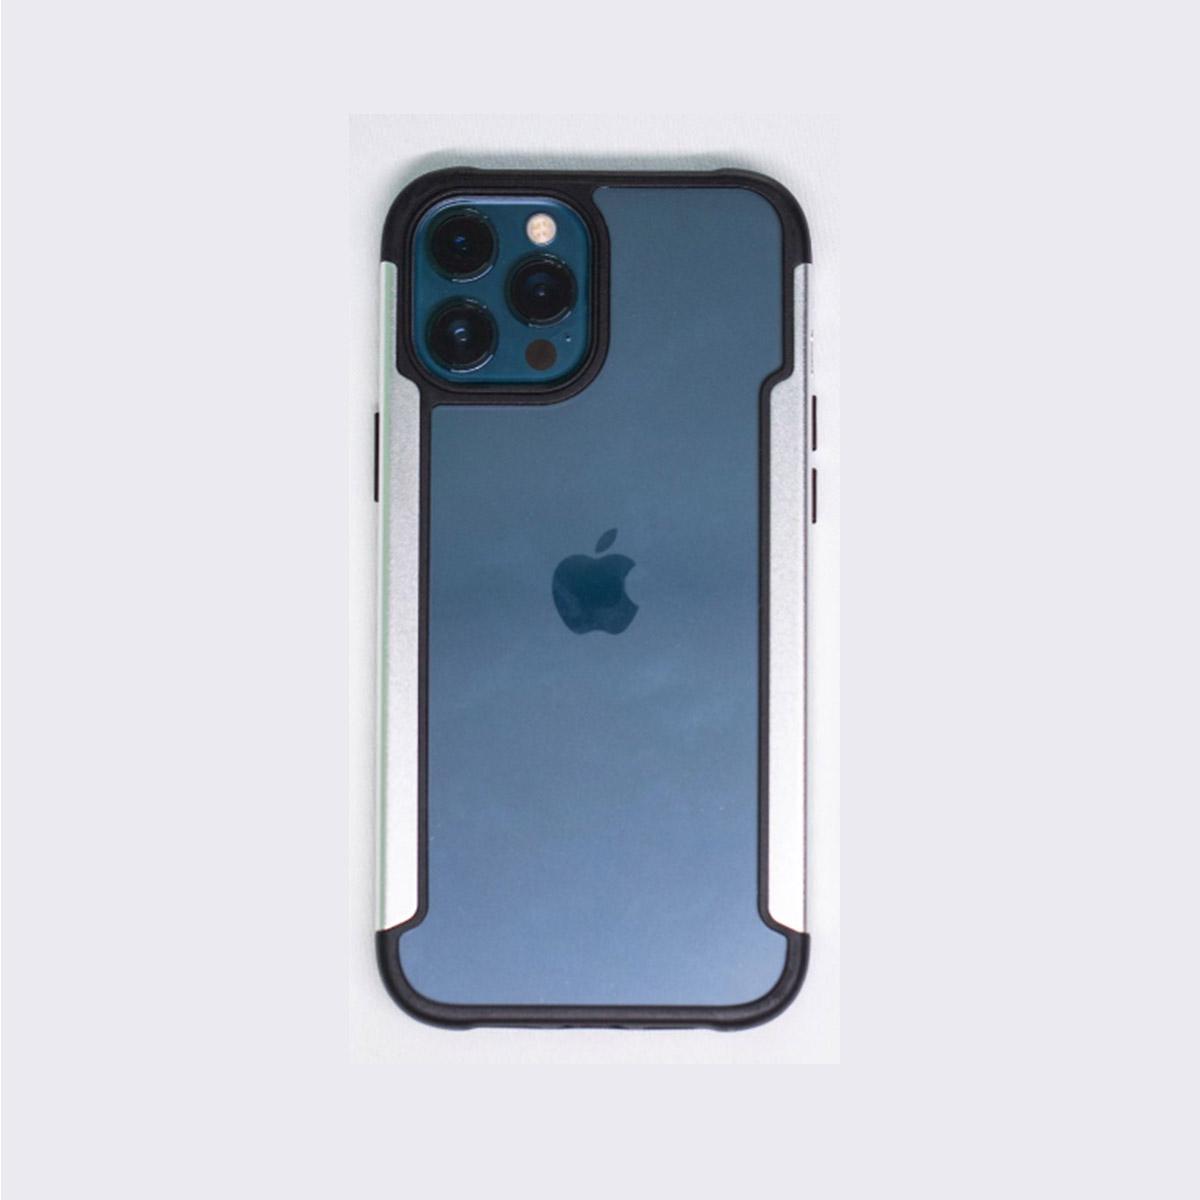 G-Case Draven Case For iPhone 12 Mini